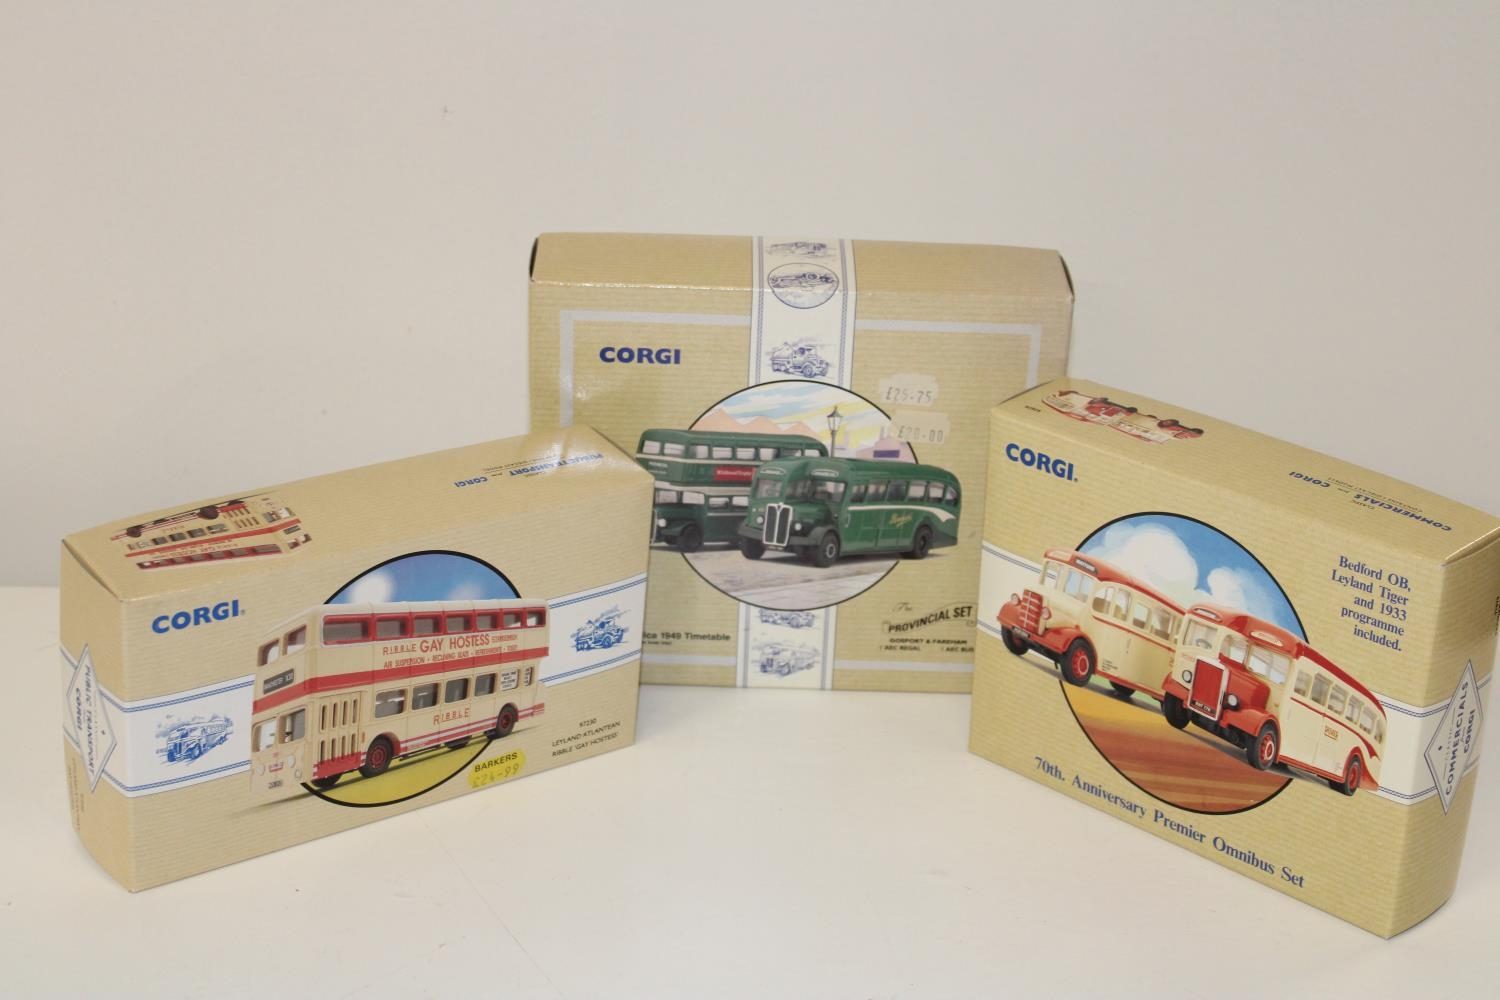 Three collectable Corgi die-cast bus models